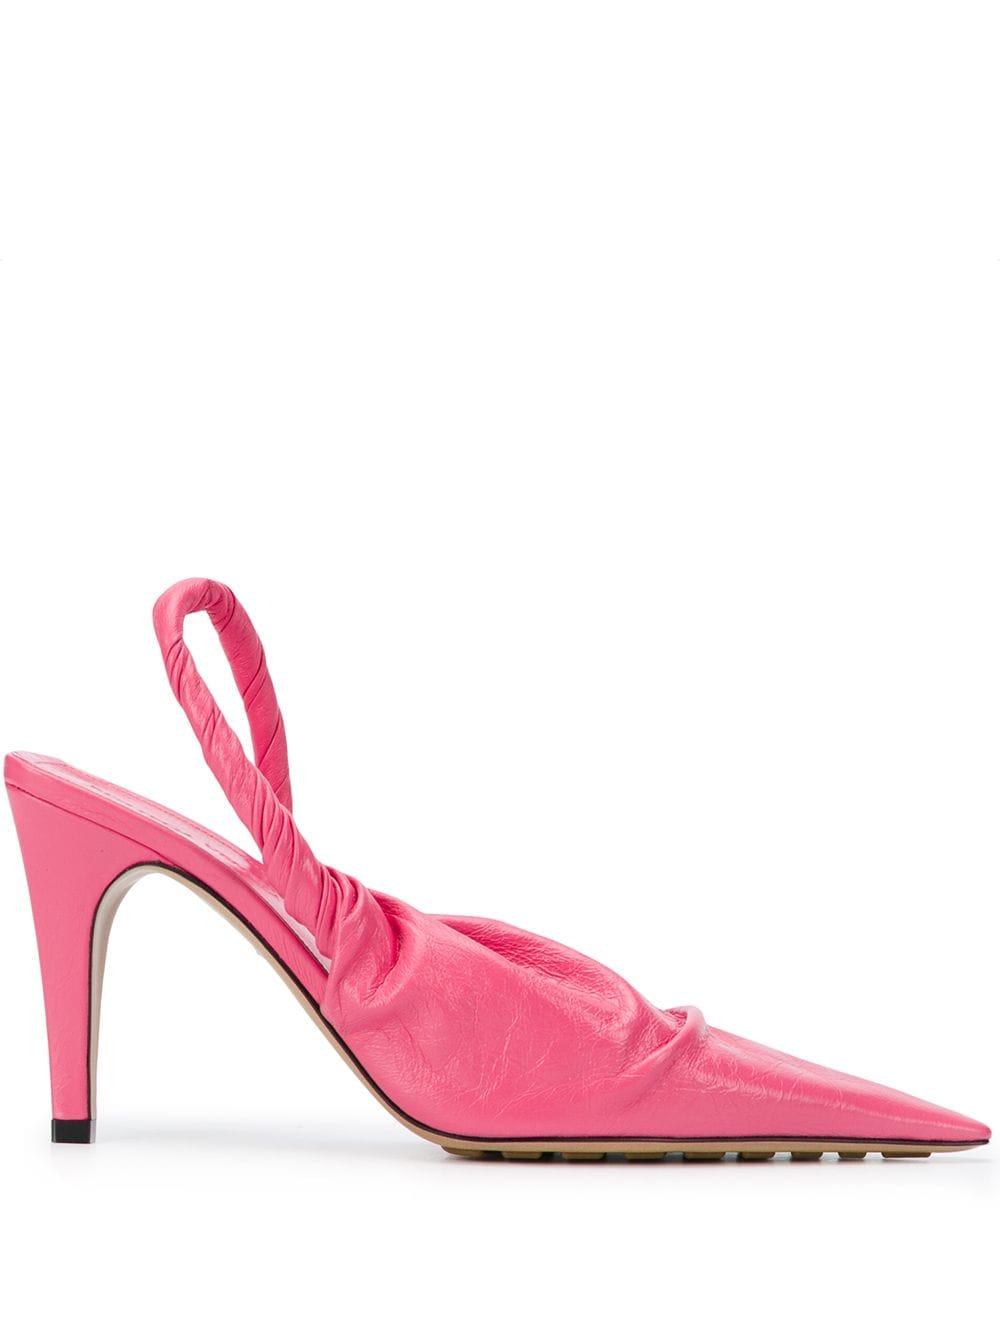 Bottega Veneta Leather Bv Point High Heel Pumps In Pink Lyst